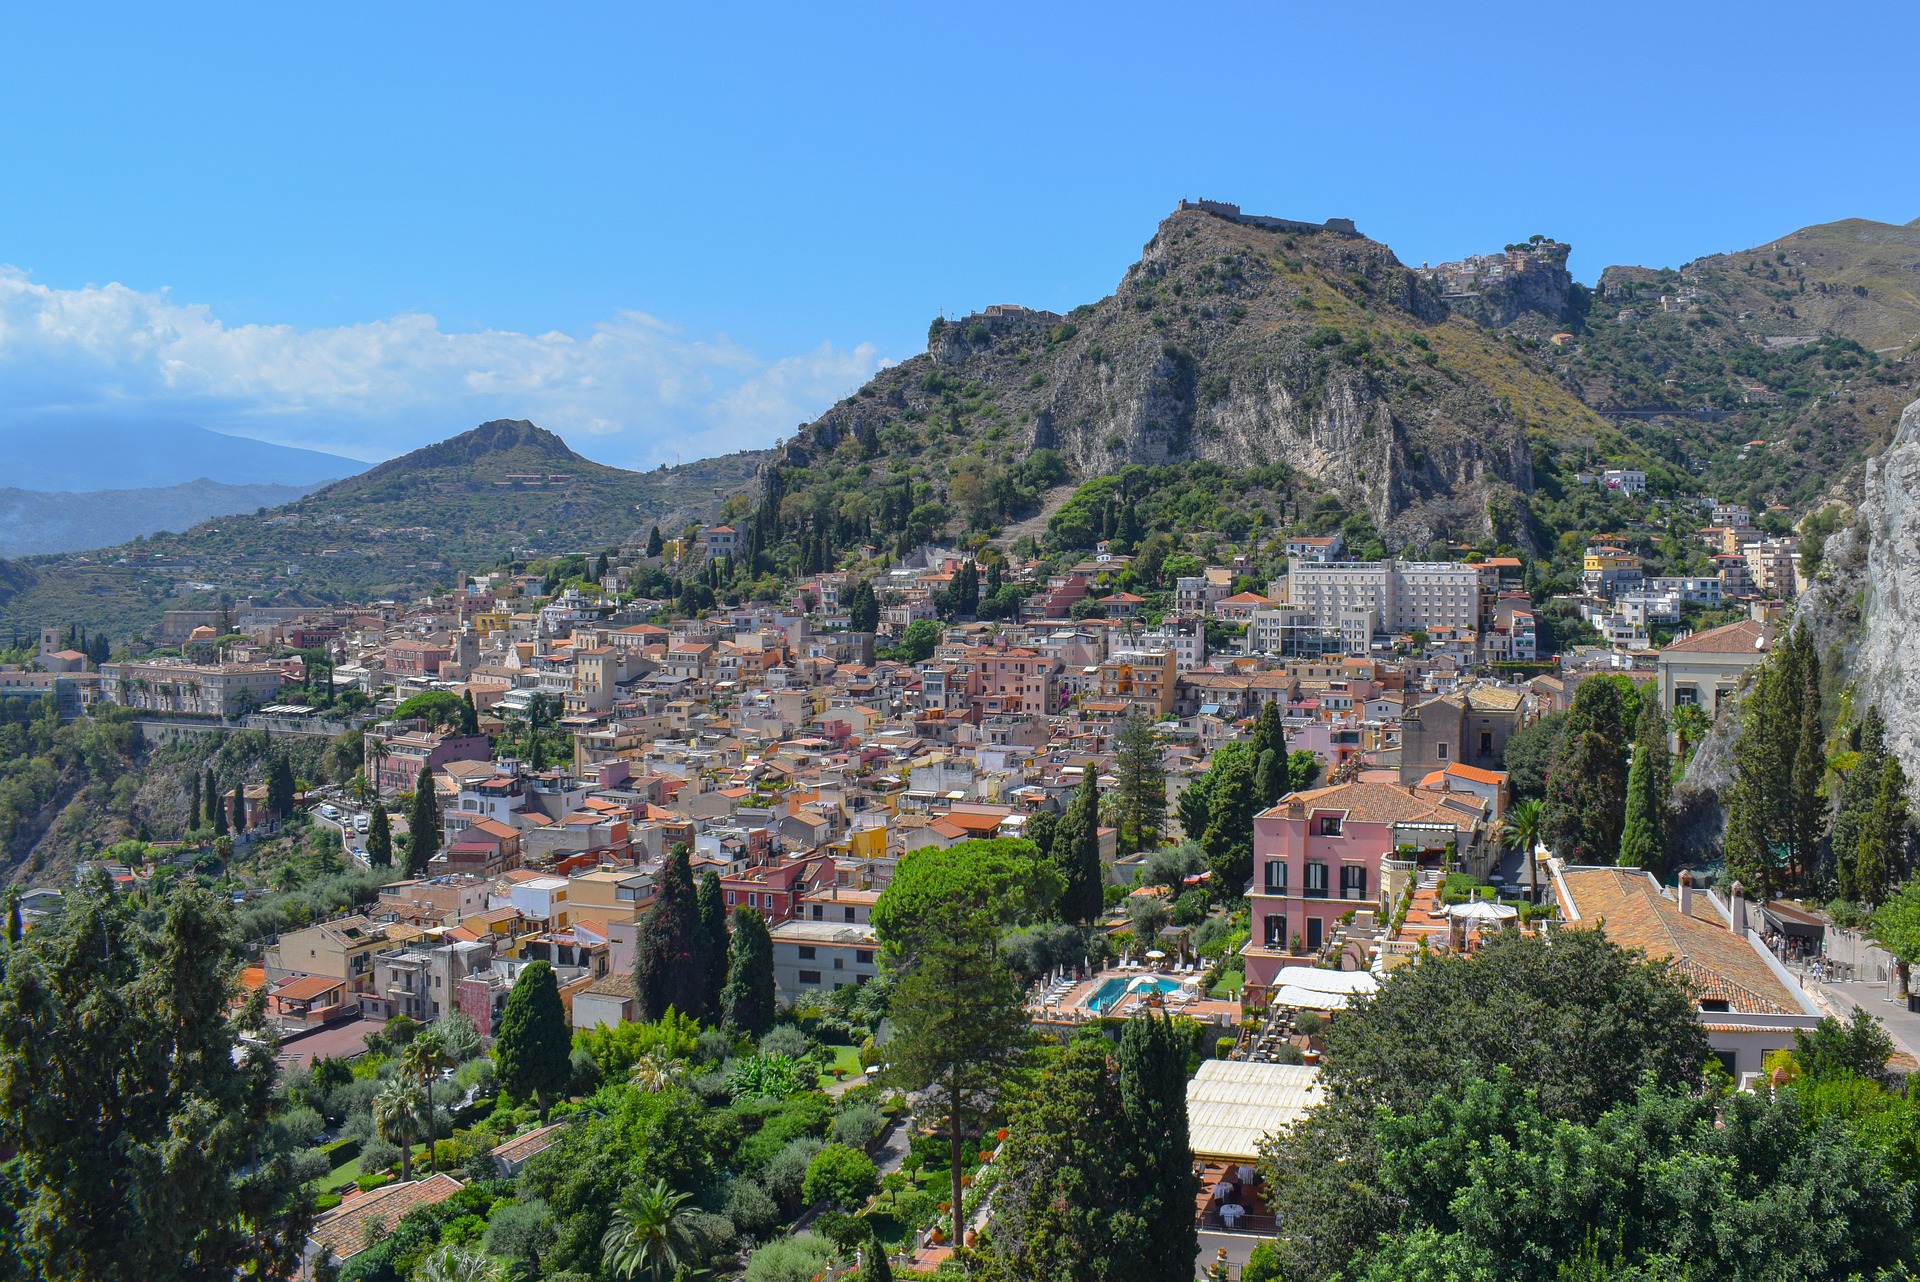 Taormina, Sicily (Photo Credit: Ben Kerckx from Pixabay)